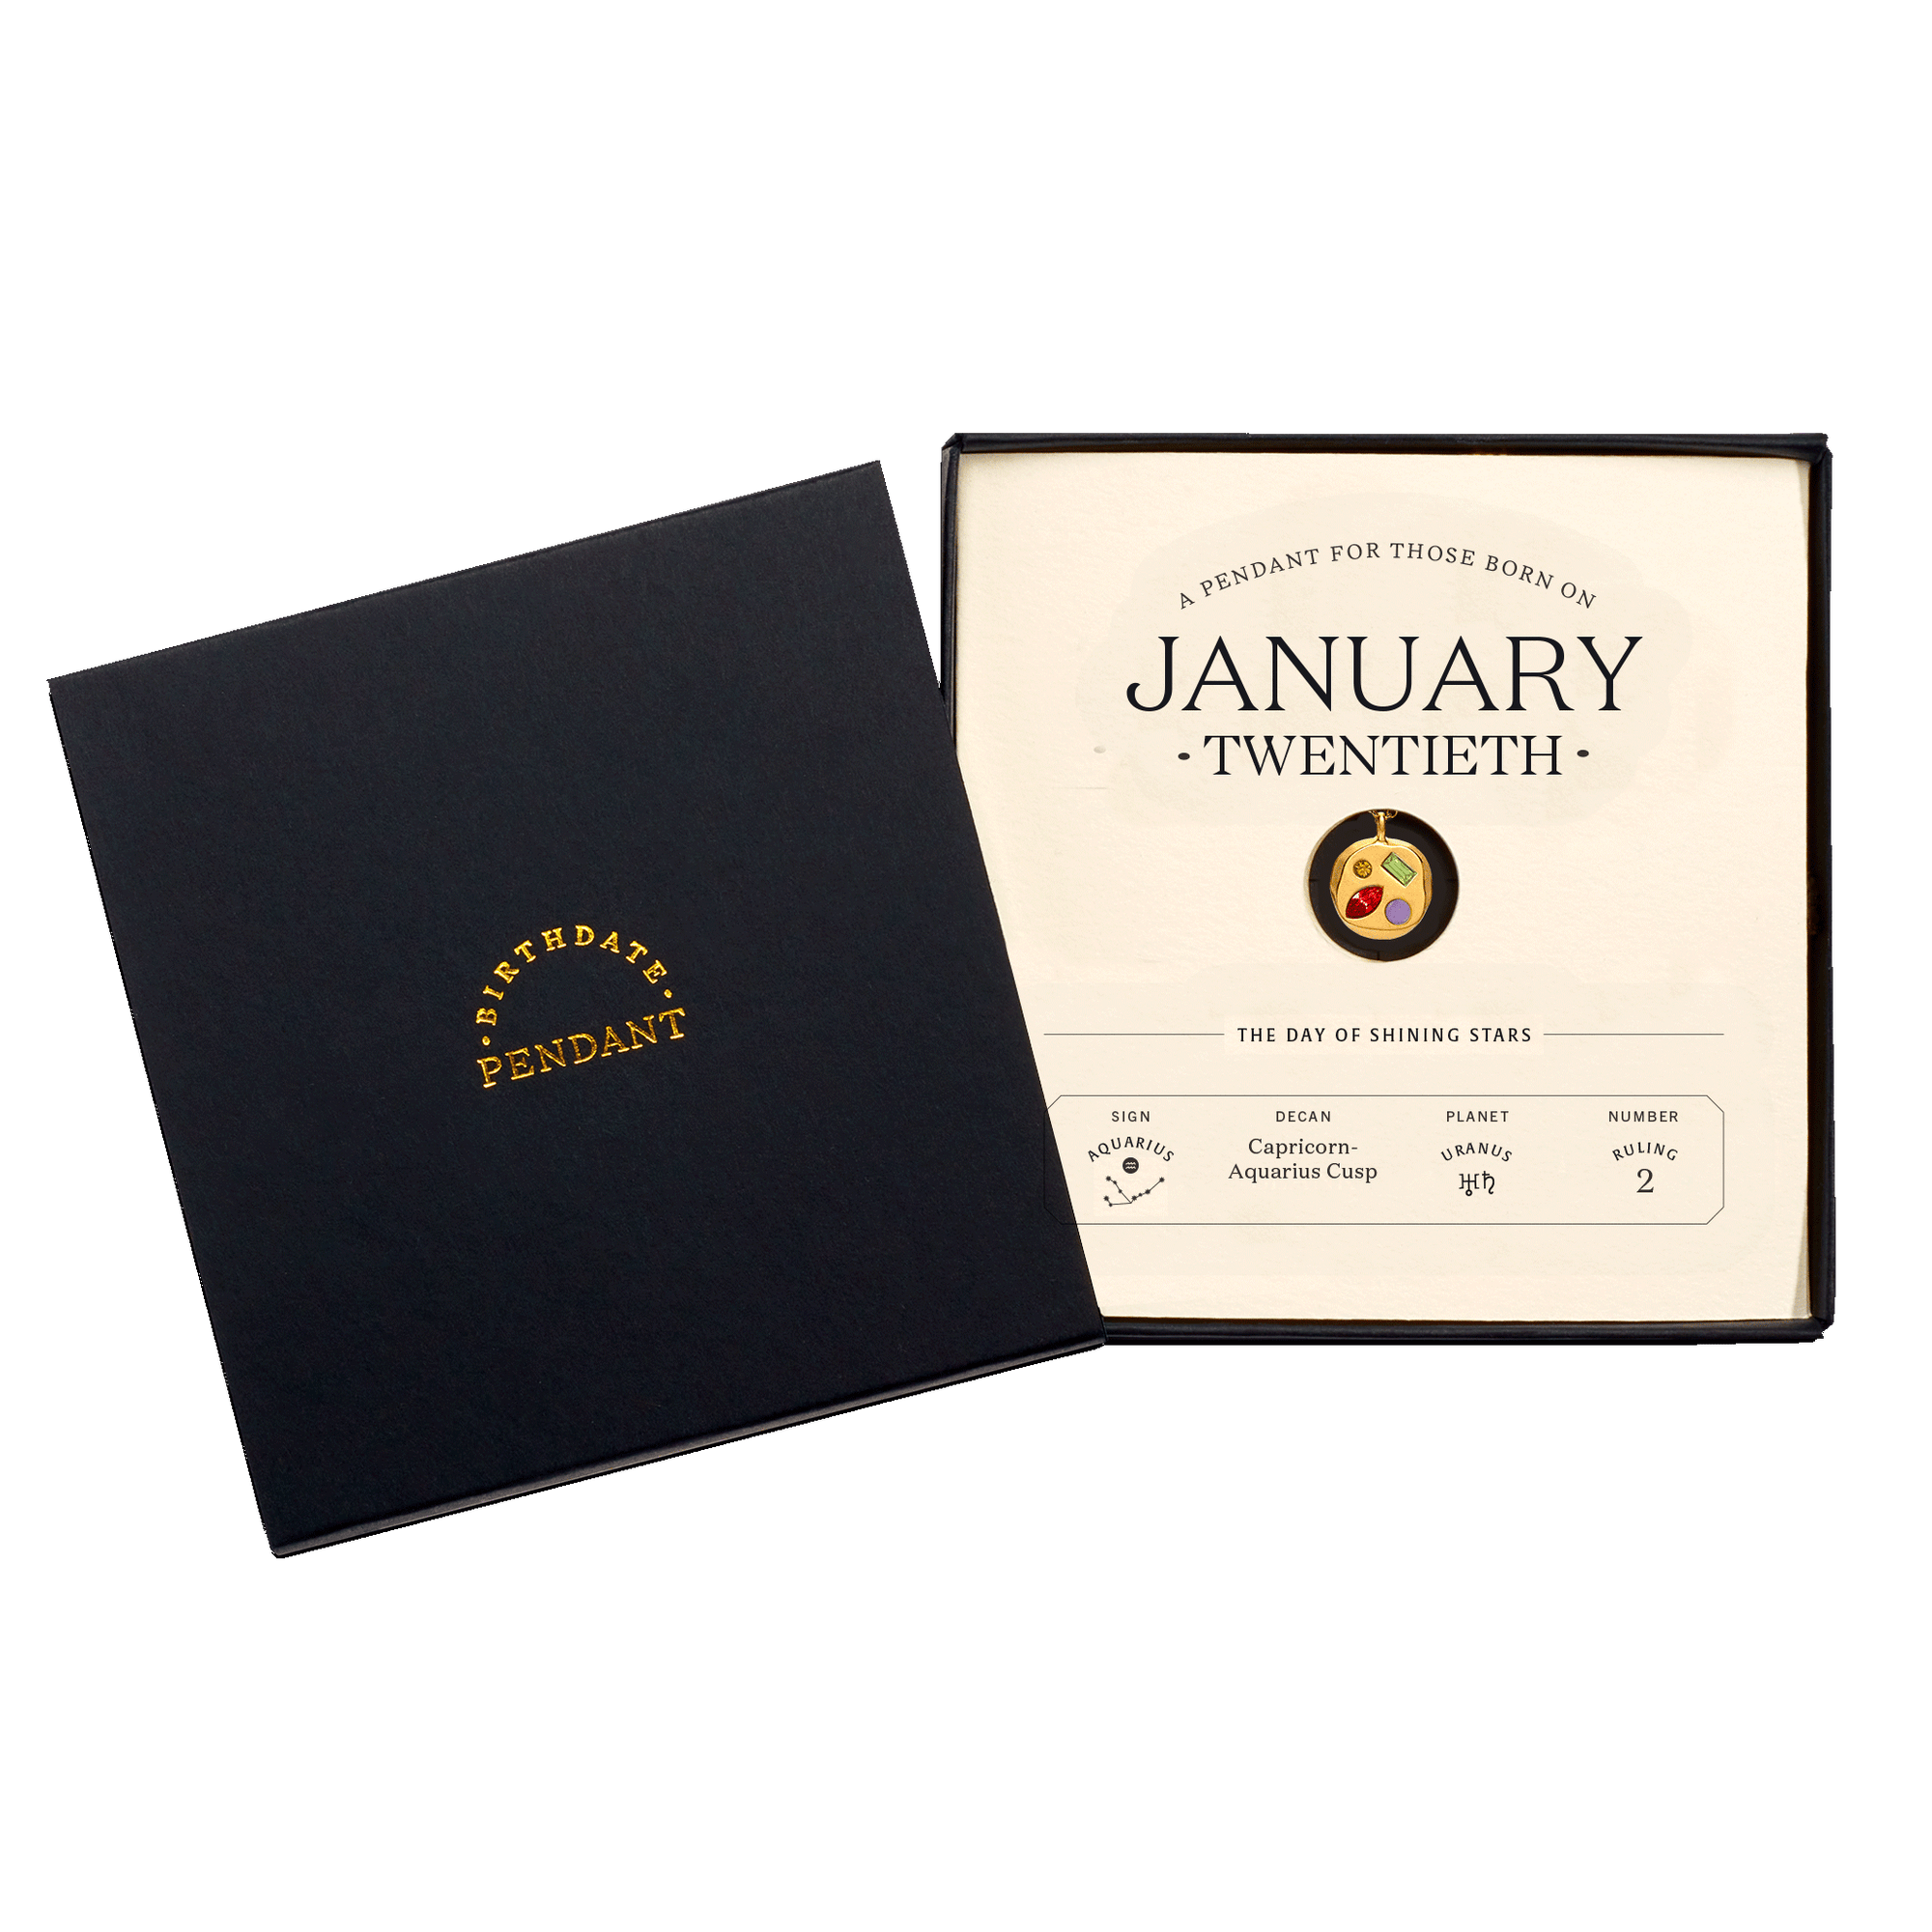 The January Twentieth Pendant inside its box